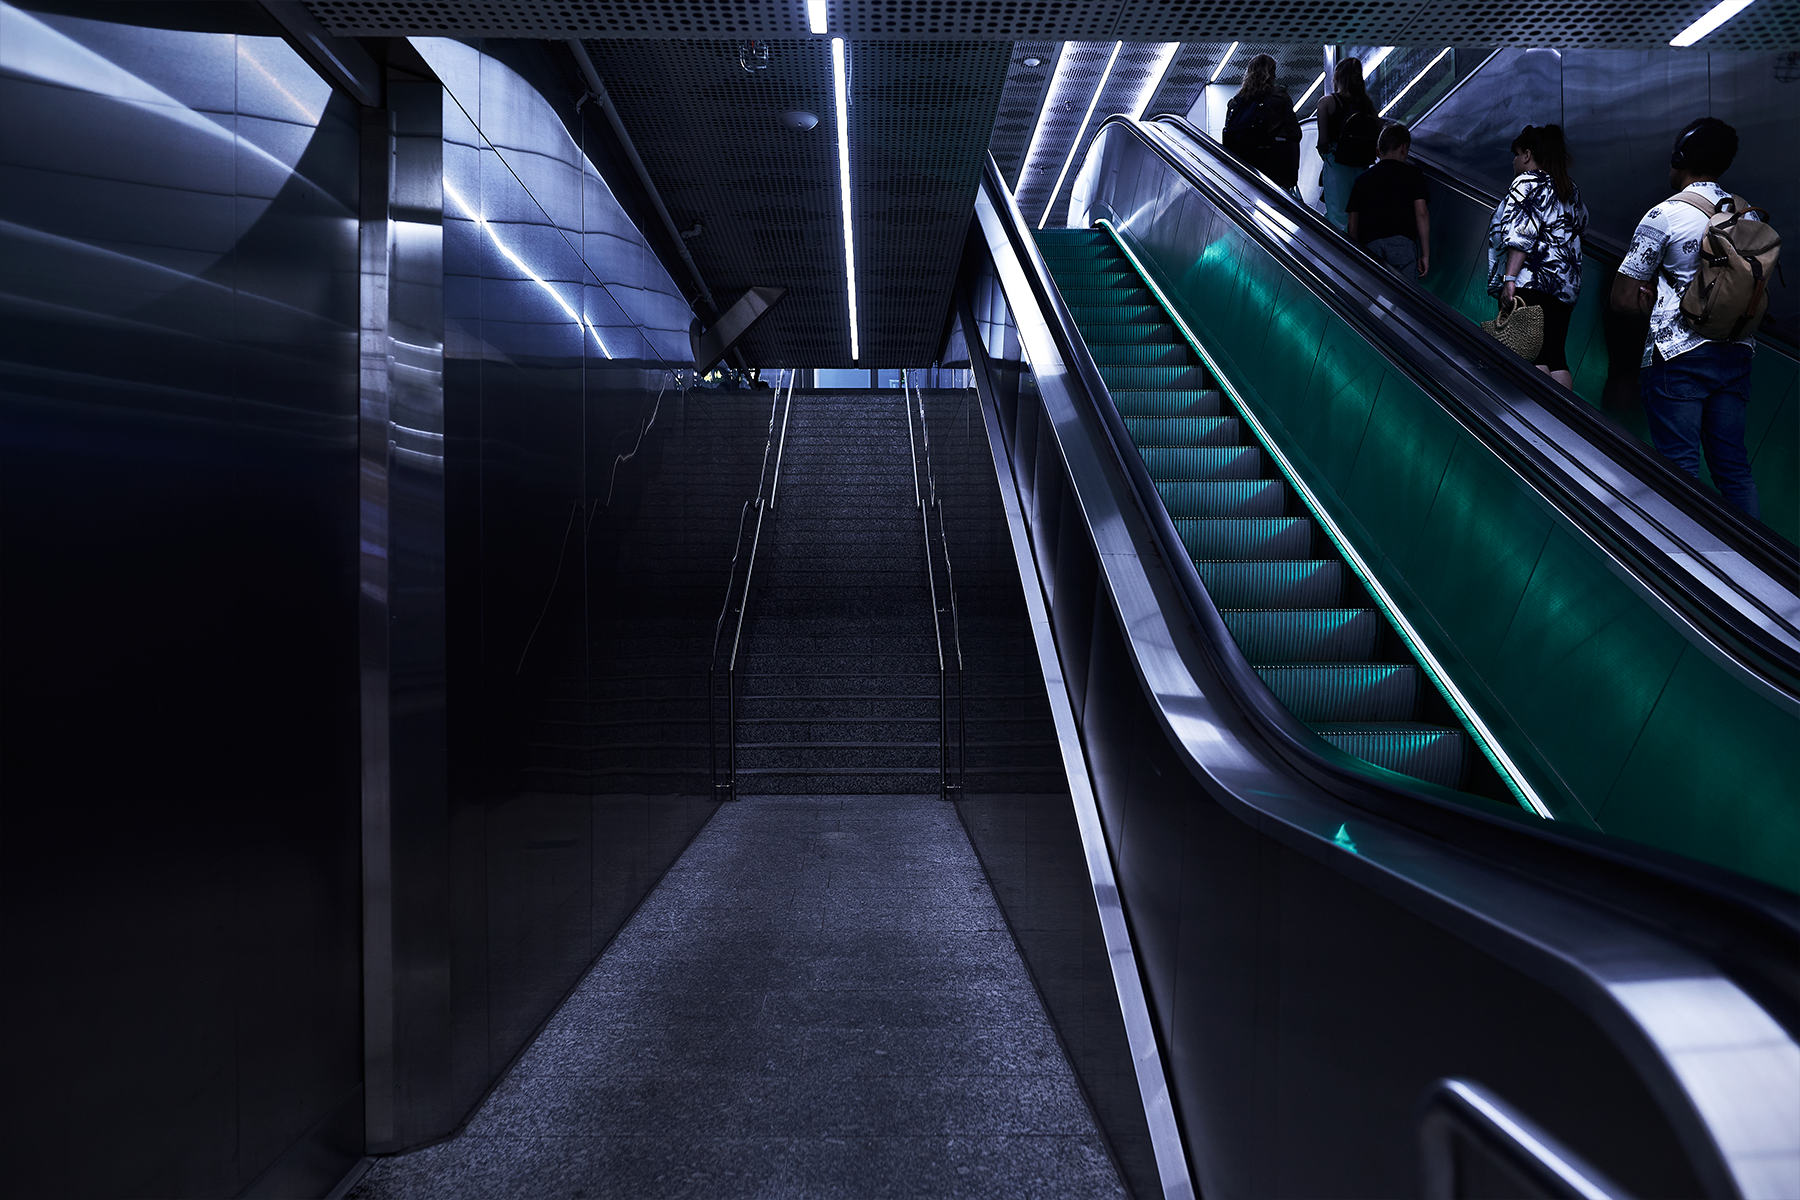  Illustration, dark blue and green picture of escalators.